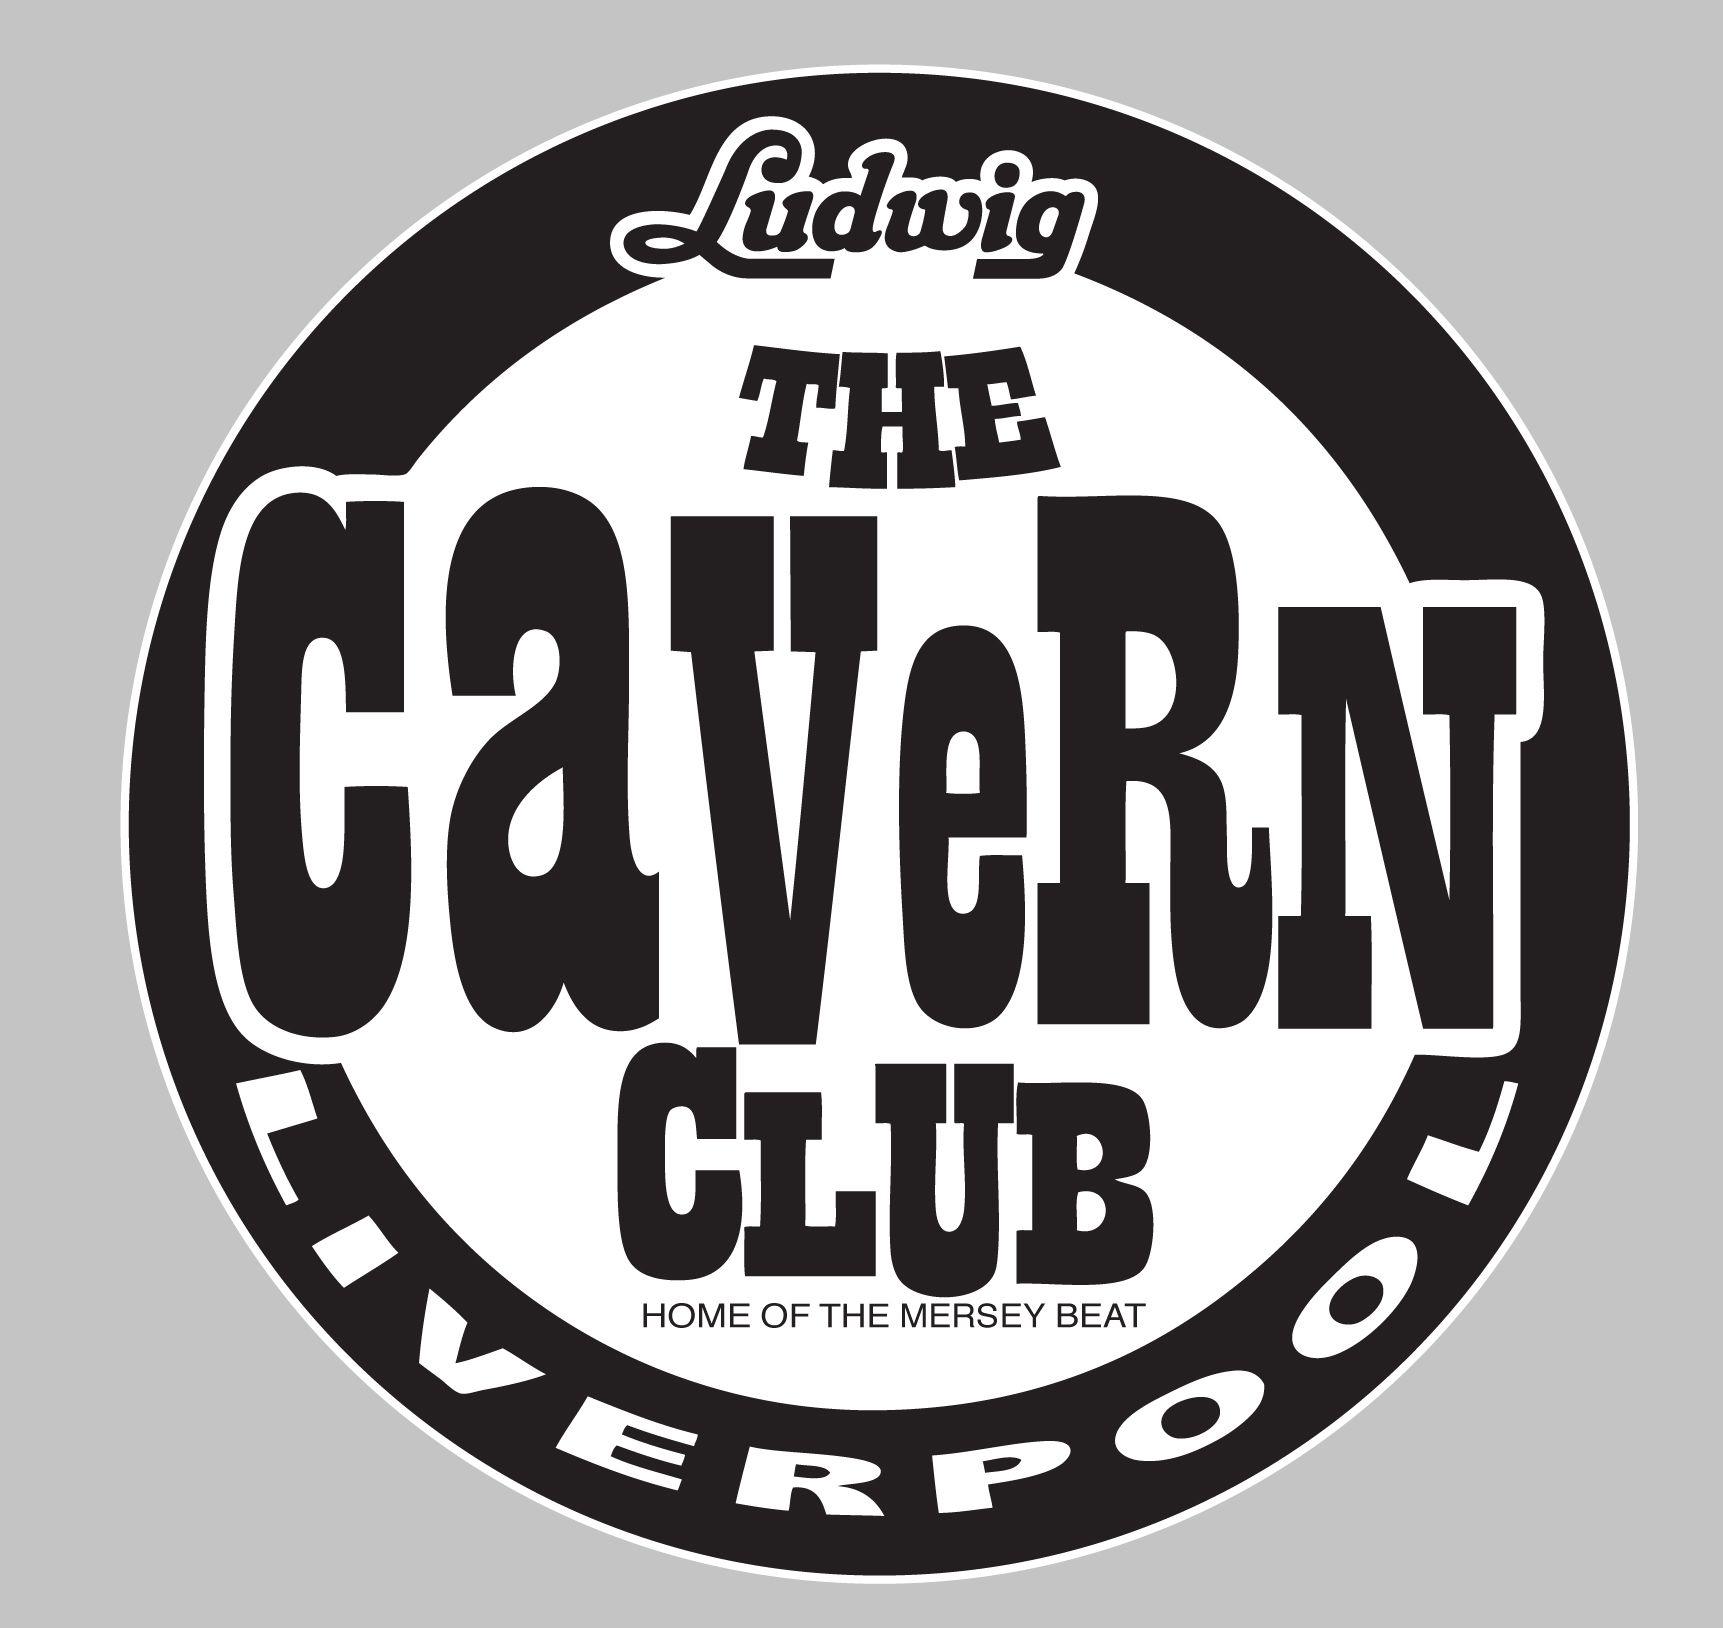 Ludwig Logo - Cavern Club Ludwig logo fridge magnet